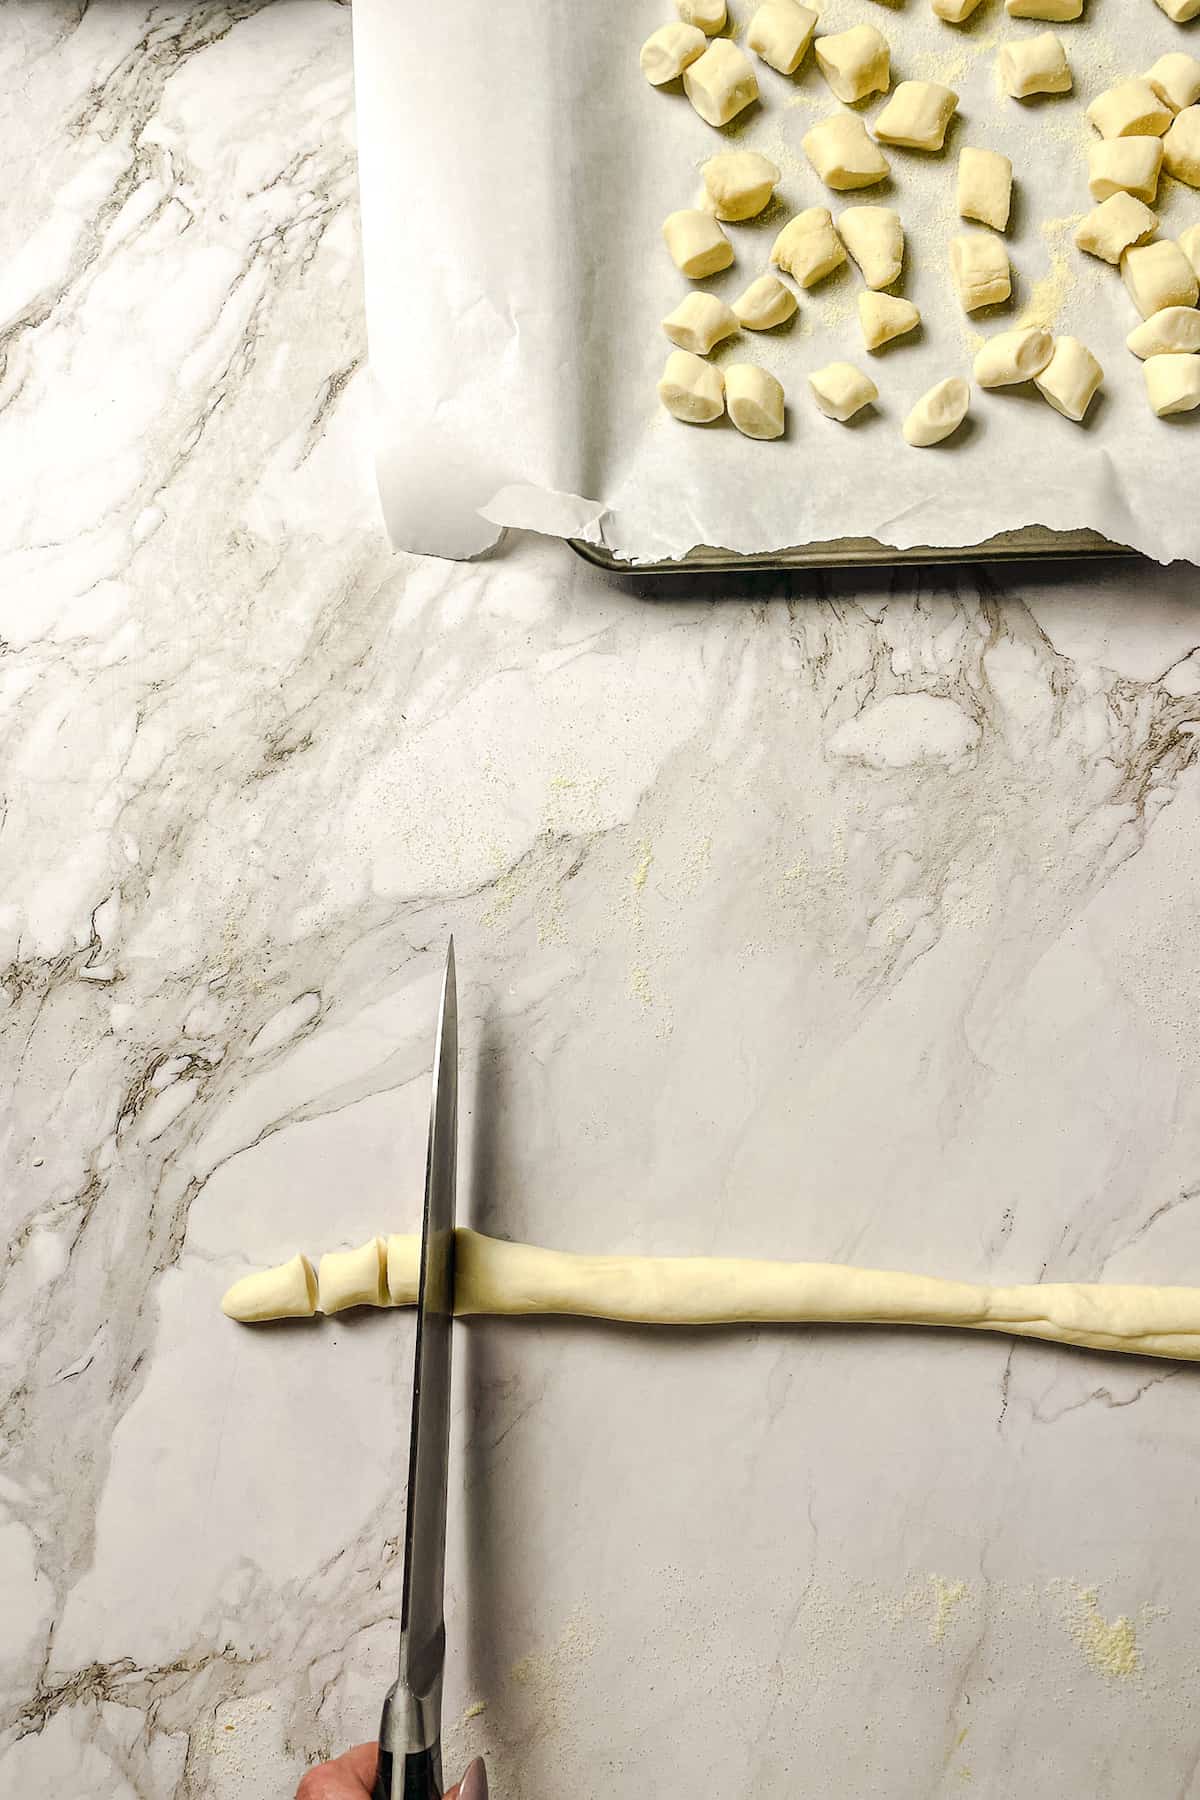 cutting a log of ricotta gnocchi dough